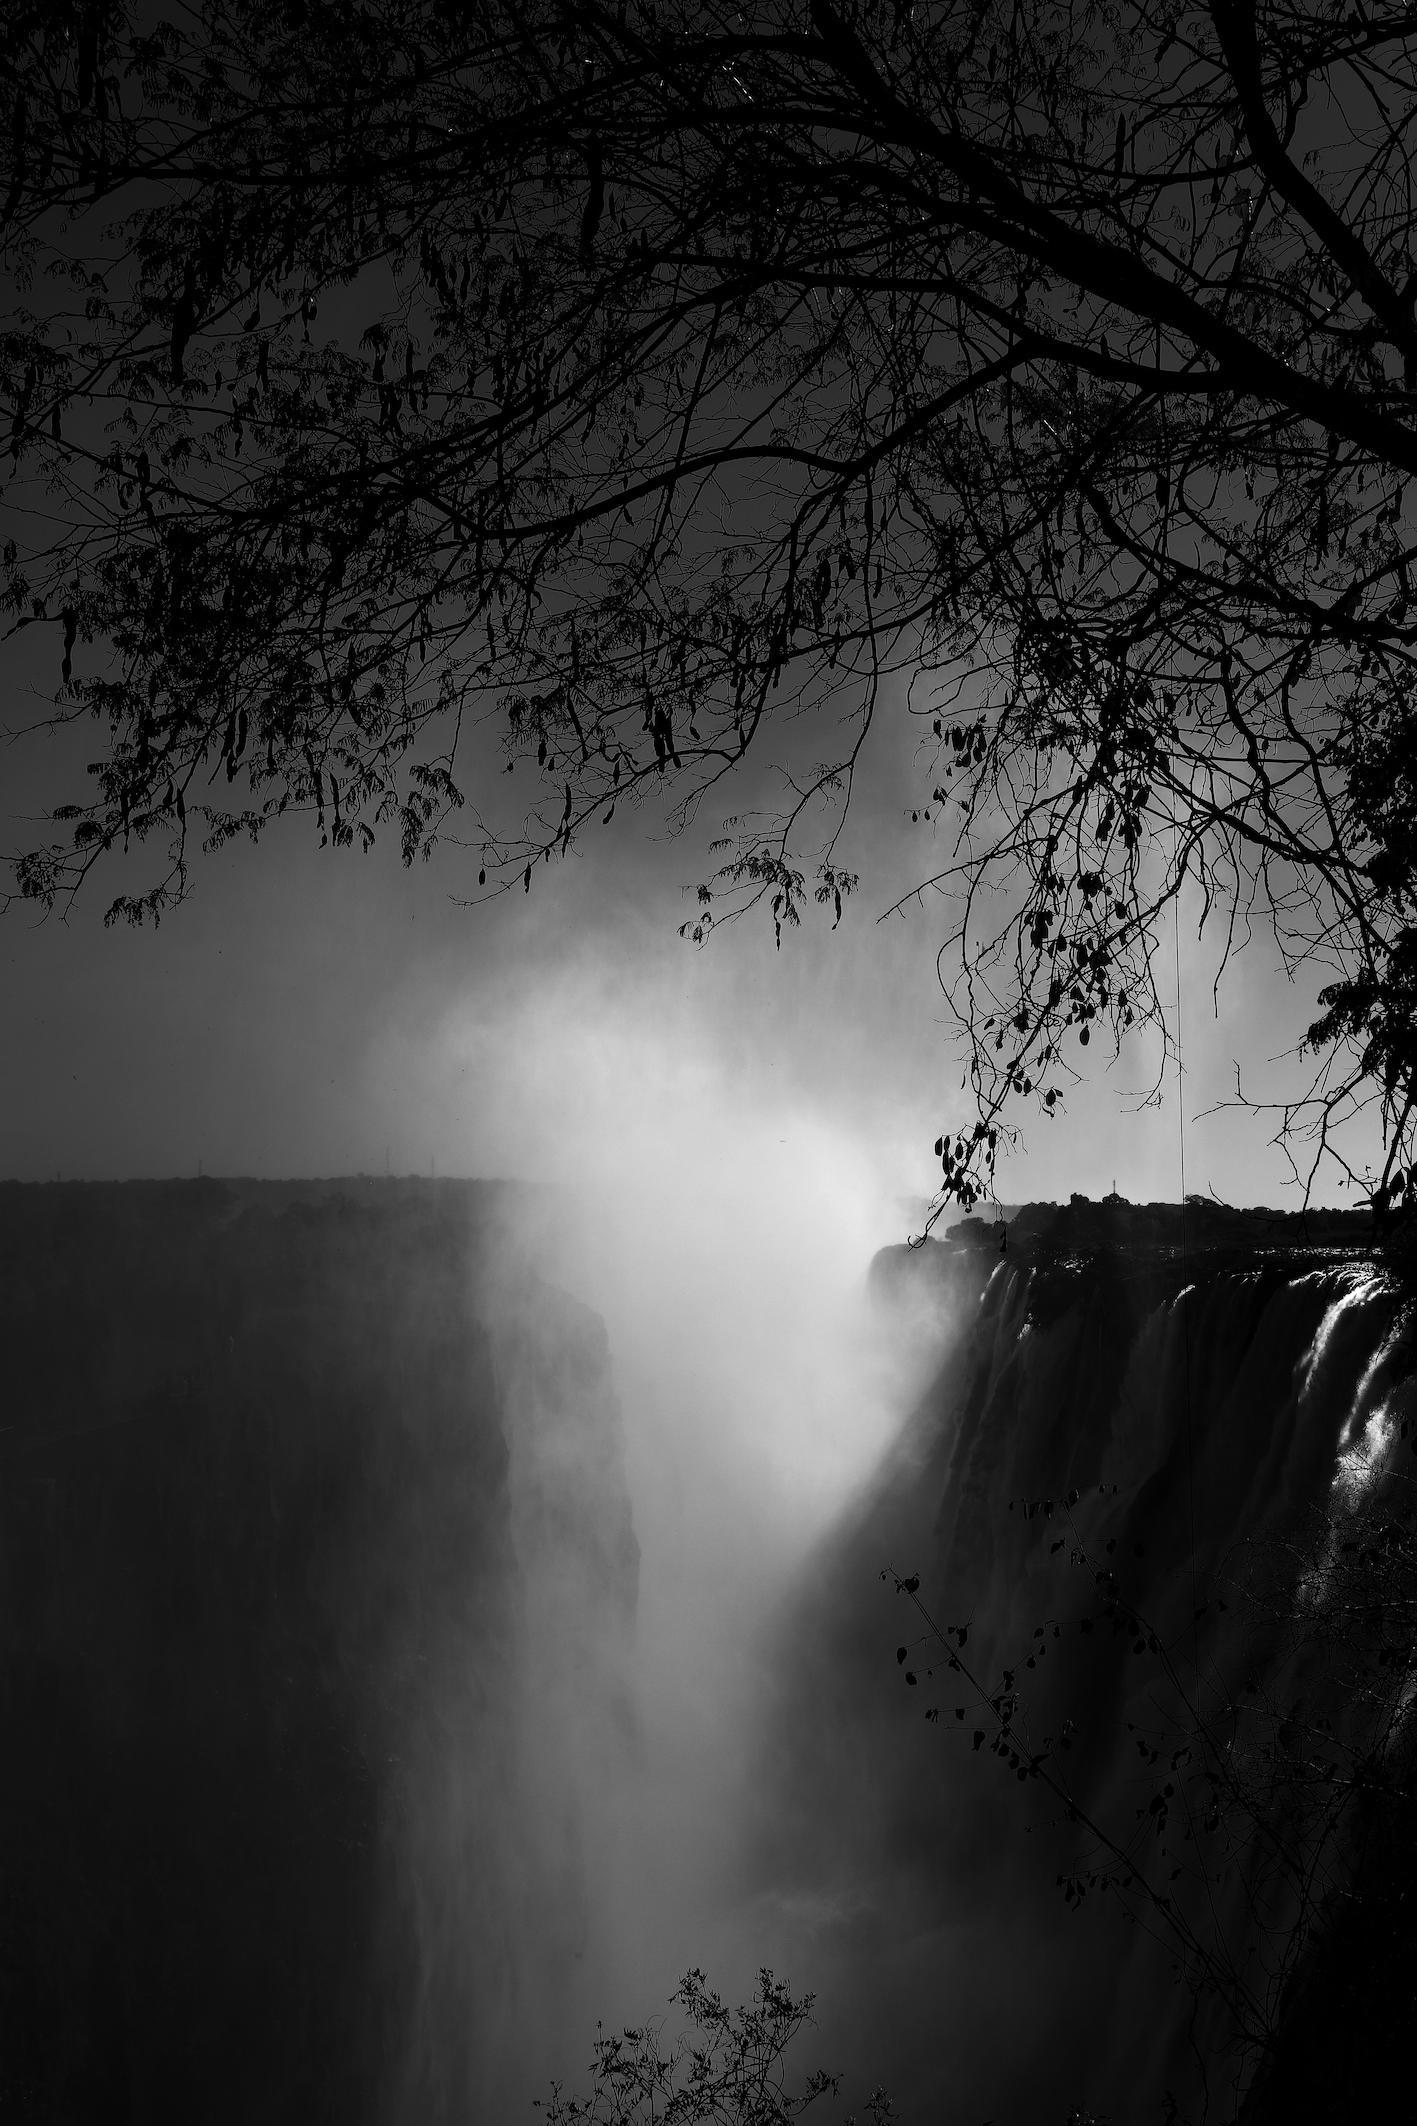 Victoria falls zimbabwe